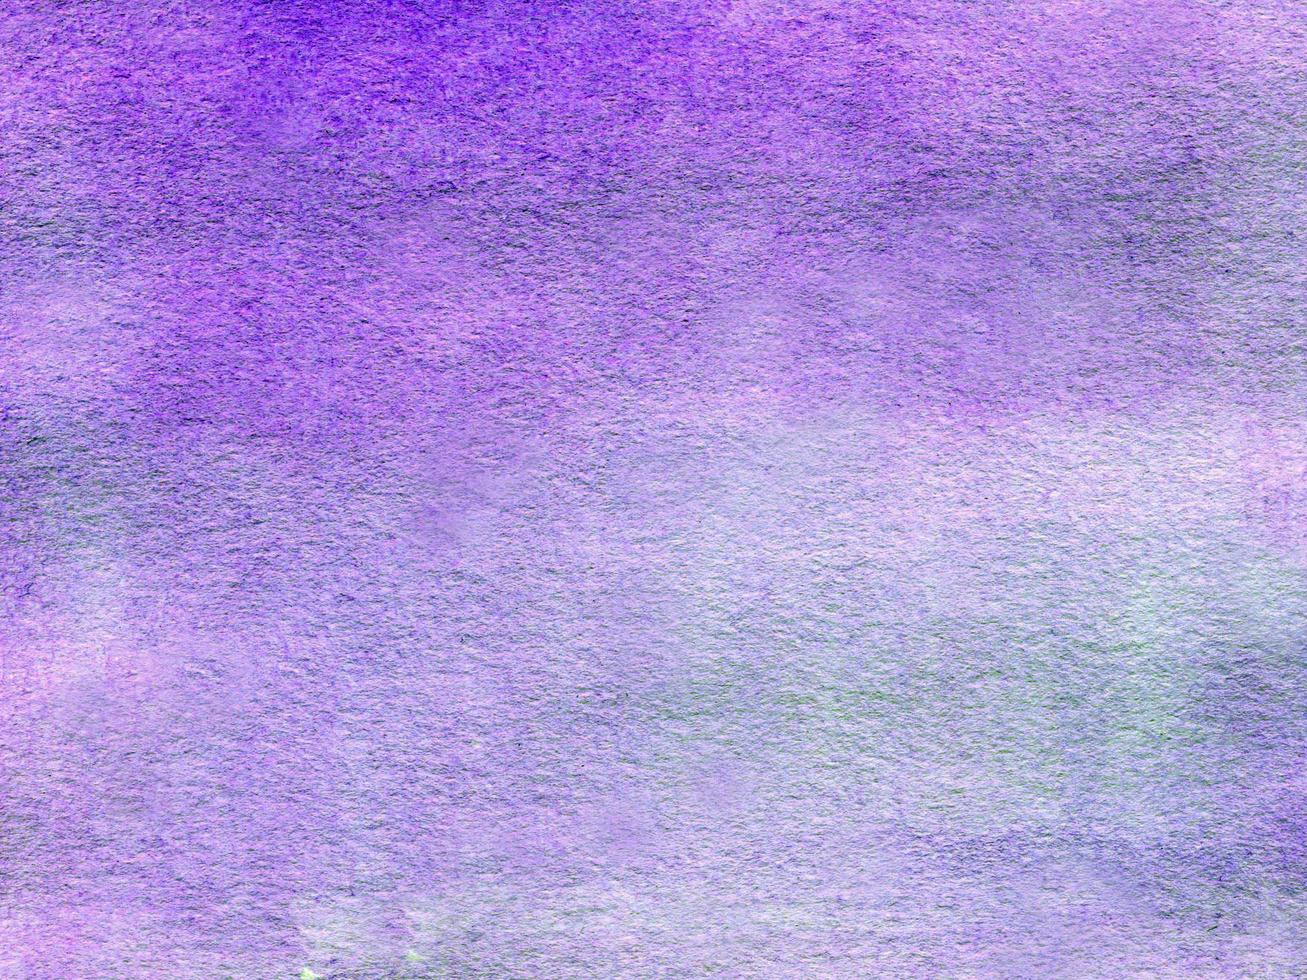 paarse aquarelachtergrond met vlekken, stippen, vage cirkels foto